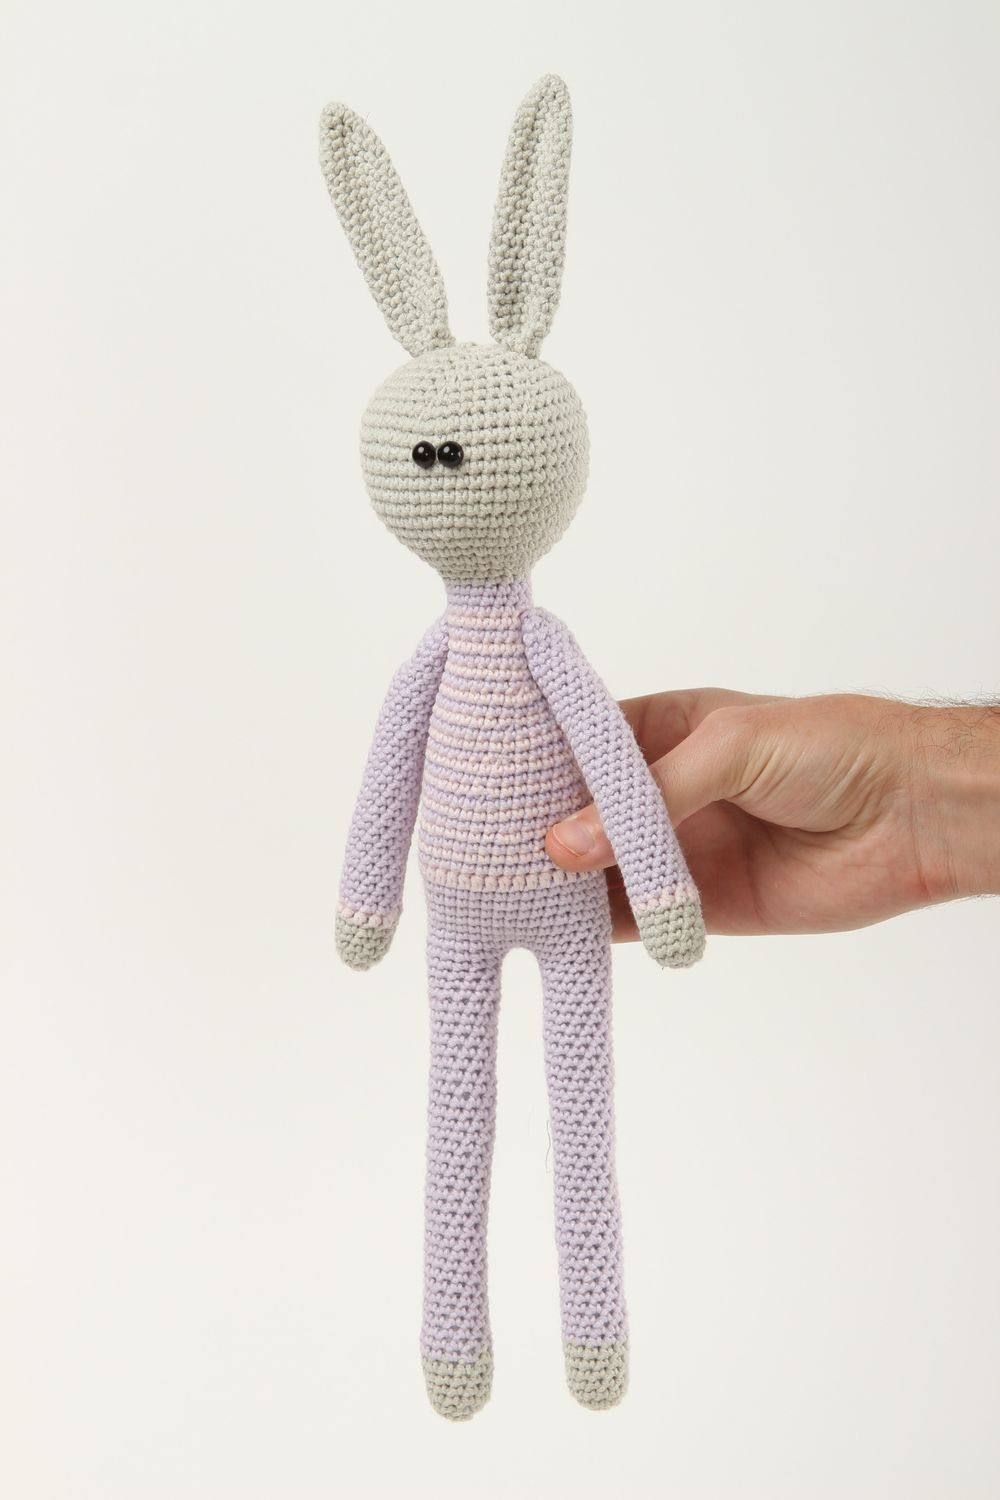 Handmade soft toy bunny toy design crocheted toy handmade soft toy toy for kids  photo 5